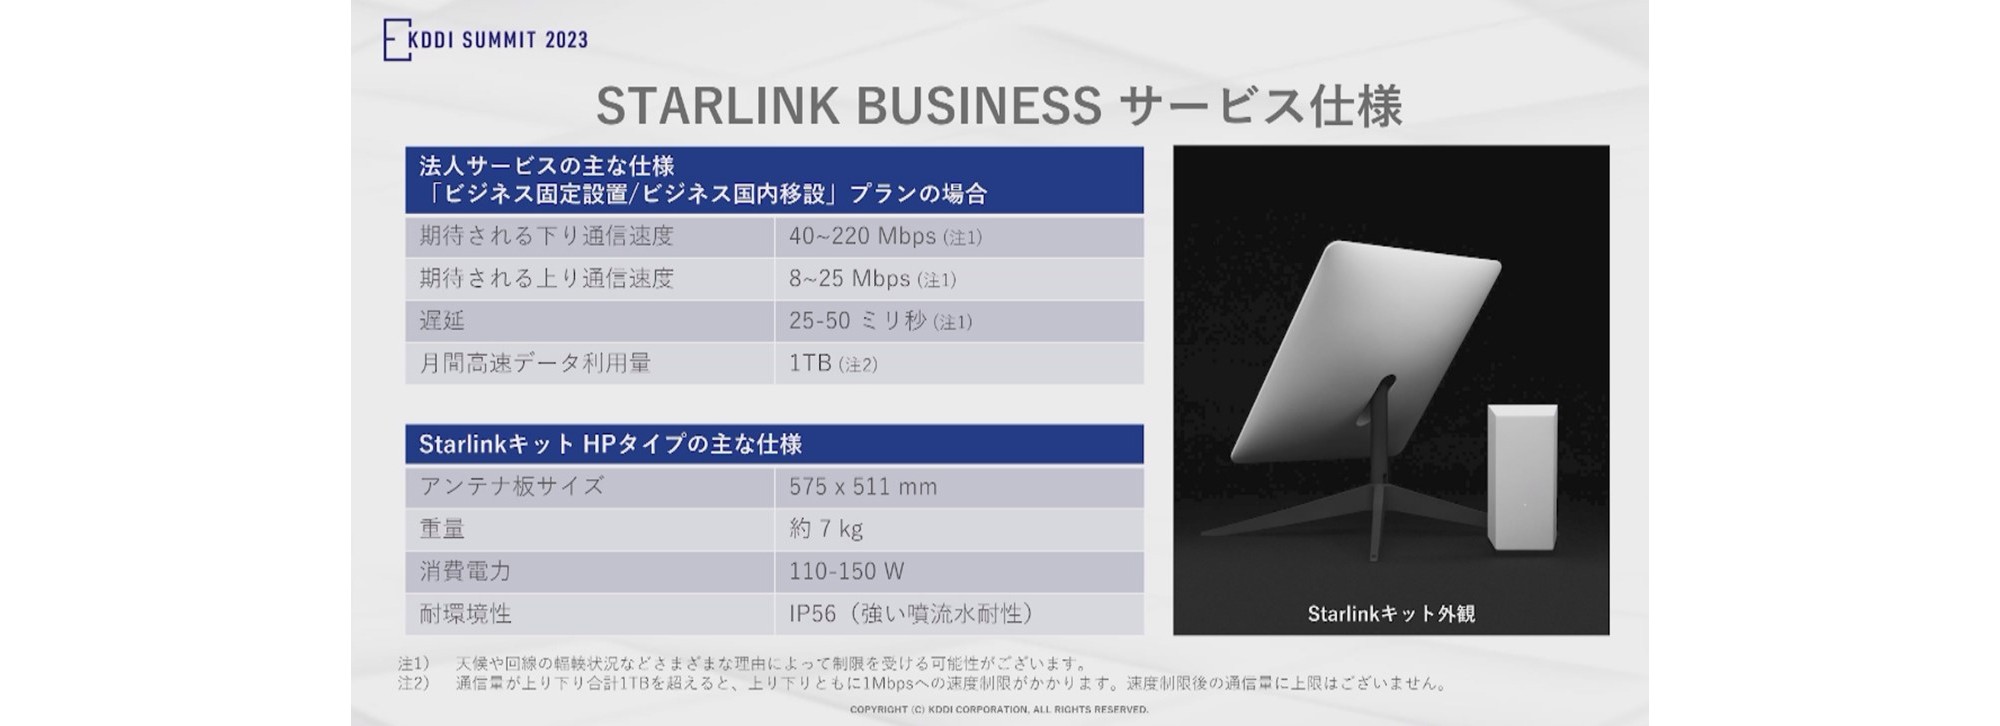 STARLINK BUSINESS サービス仕様、法人サービスの主な仕様「ビジネス固定設置/ ビジネス国内移設」 プランの場合、期待される下り通信速度：40～220Mbps (注1)、期待される上り通信速度：8～25Mbps (注1)、遅延：25-50ミリ秒 (注1)、月間高速データ利用量：1TB (注2)、Starlink キット HPタイプの主な仕様、アンテナ板サイズ：575x511mm、重量：約7kg、消費電力：110-150W、耐環境性：IP56 (強い噴流水耐性)、(注1) 天候や回線の輻輳状況などさまざまな理由によって制限を受ける可能性がございます。(注2) 通信量が上り下り合計1TBを超えると、上り下りともに1Mbpsへの制限がかかります。速度制限後の通信量に上限はございません。